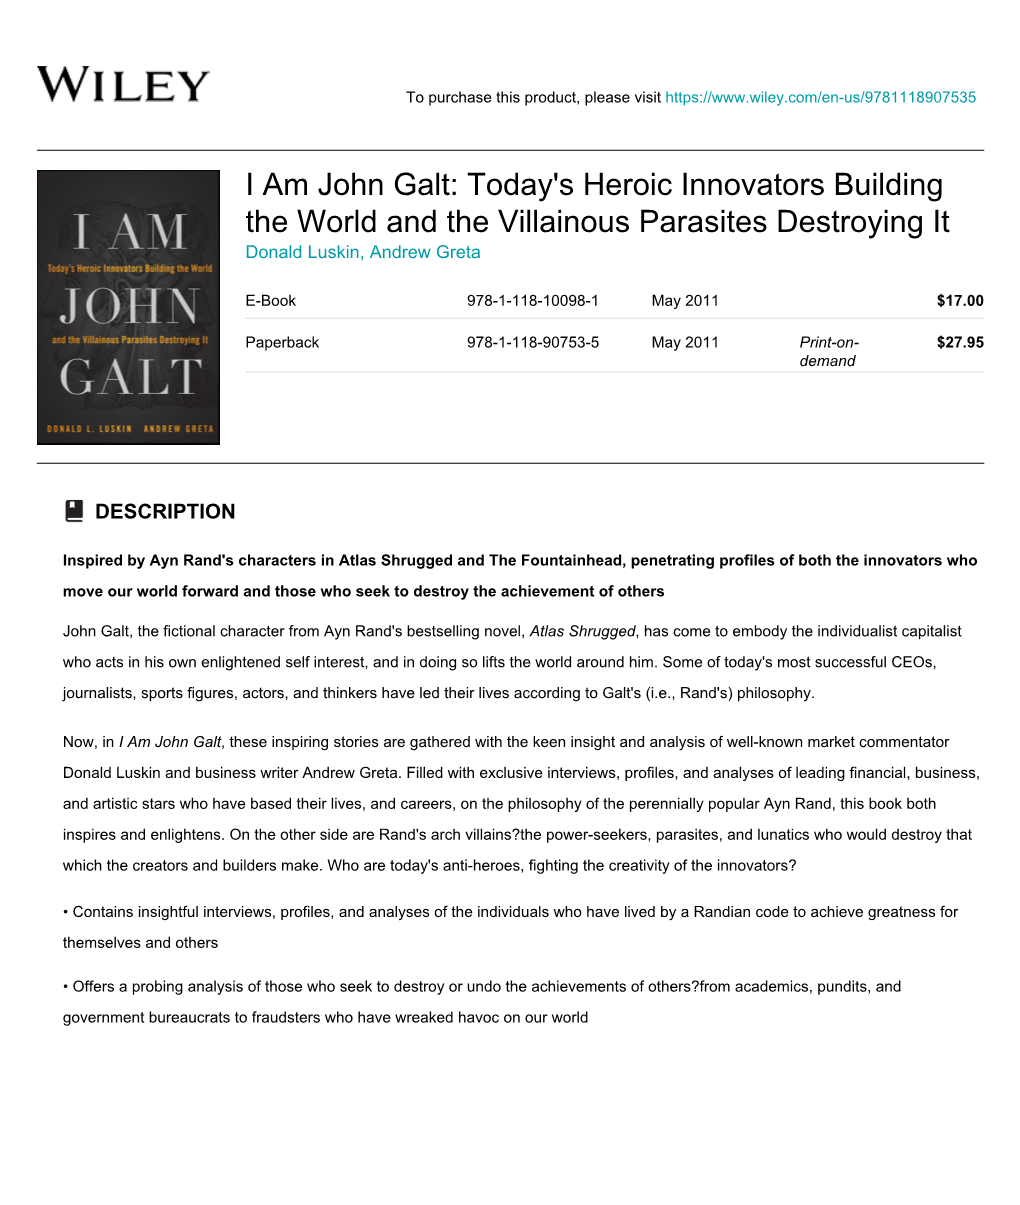 I Am John Galt: Today's Heroic Innovators Building the World and the Villainous Parasites Destroying It Donald Luskin, Andrew Greta